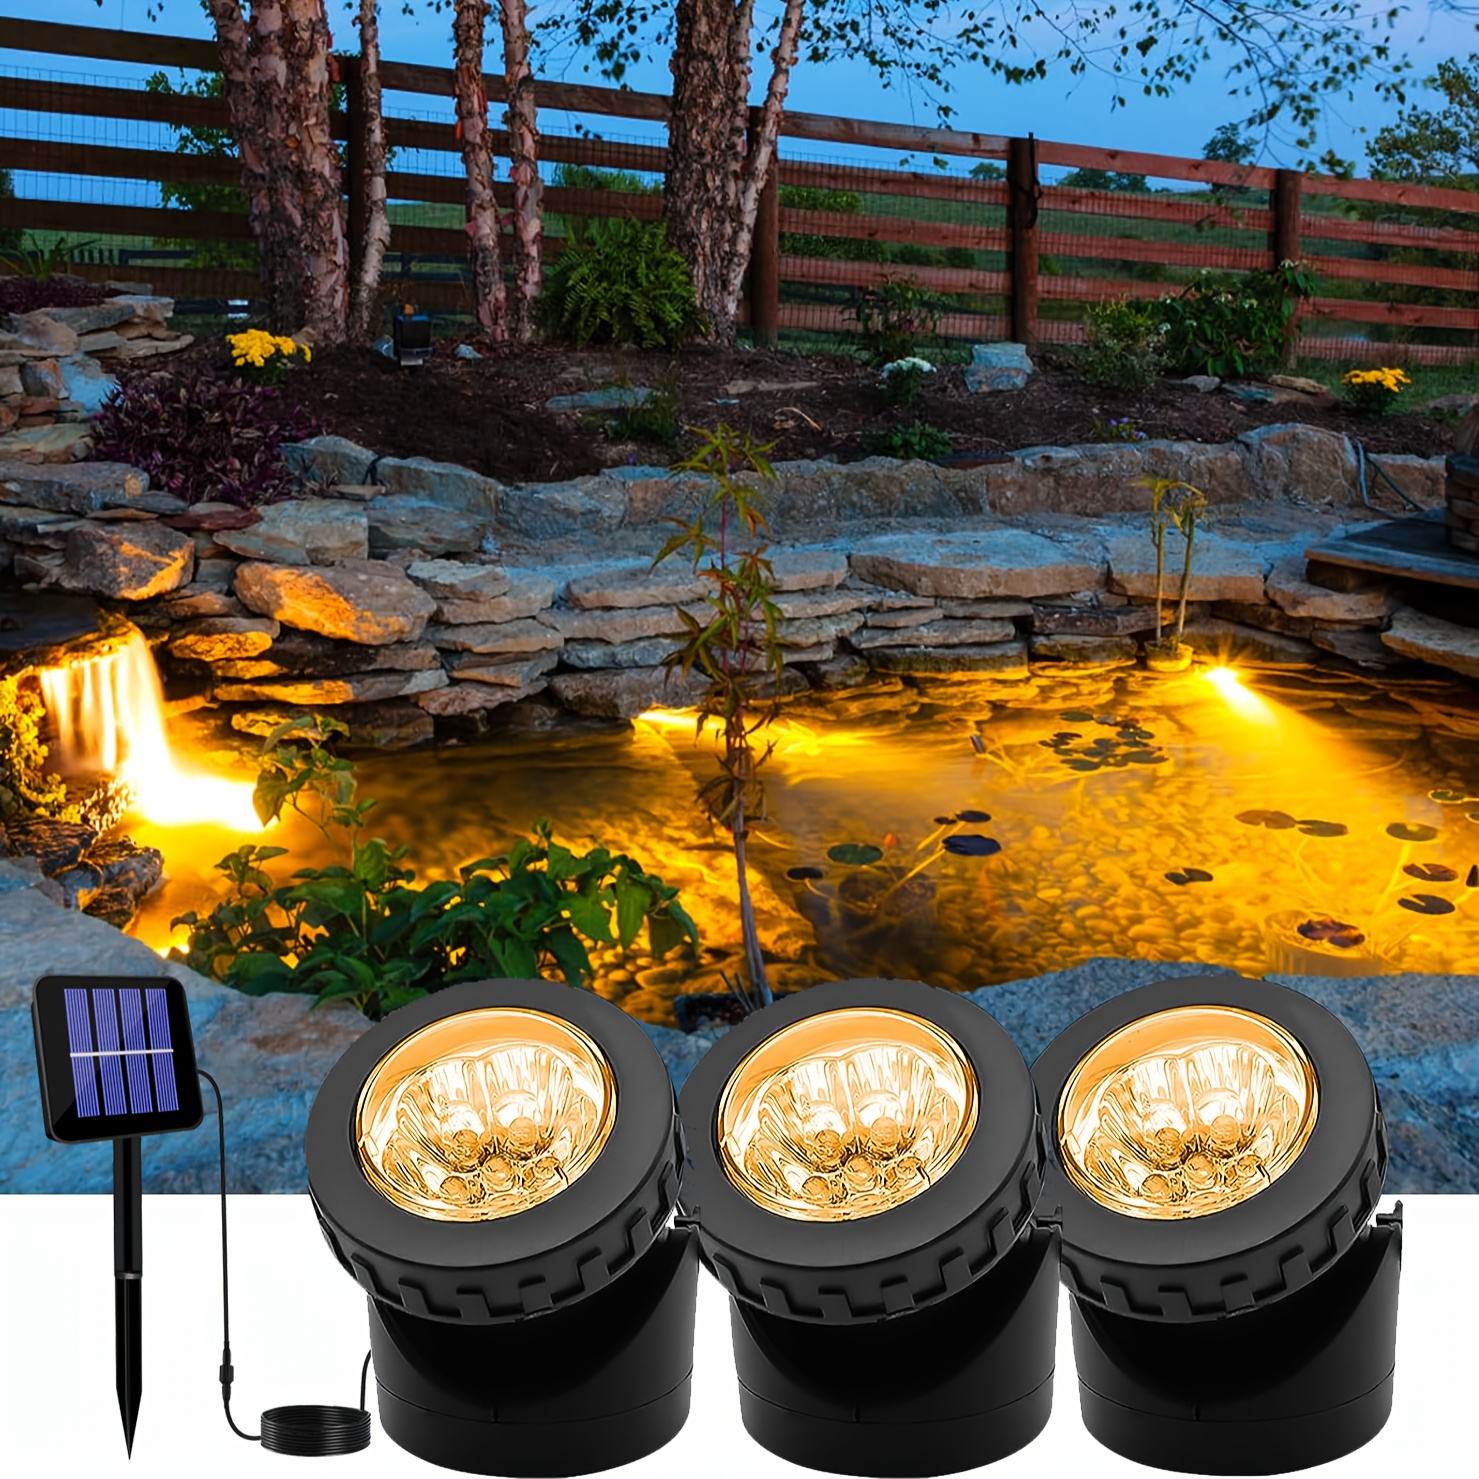 Focos solares LED sumergibles para estanques. Luces 3 en 1 de 18 LEDs. Modo  permanente o parpadeo